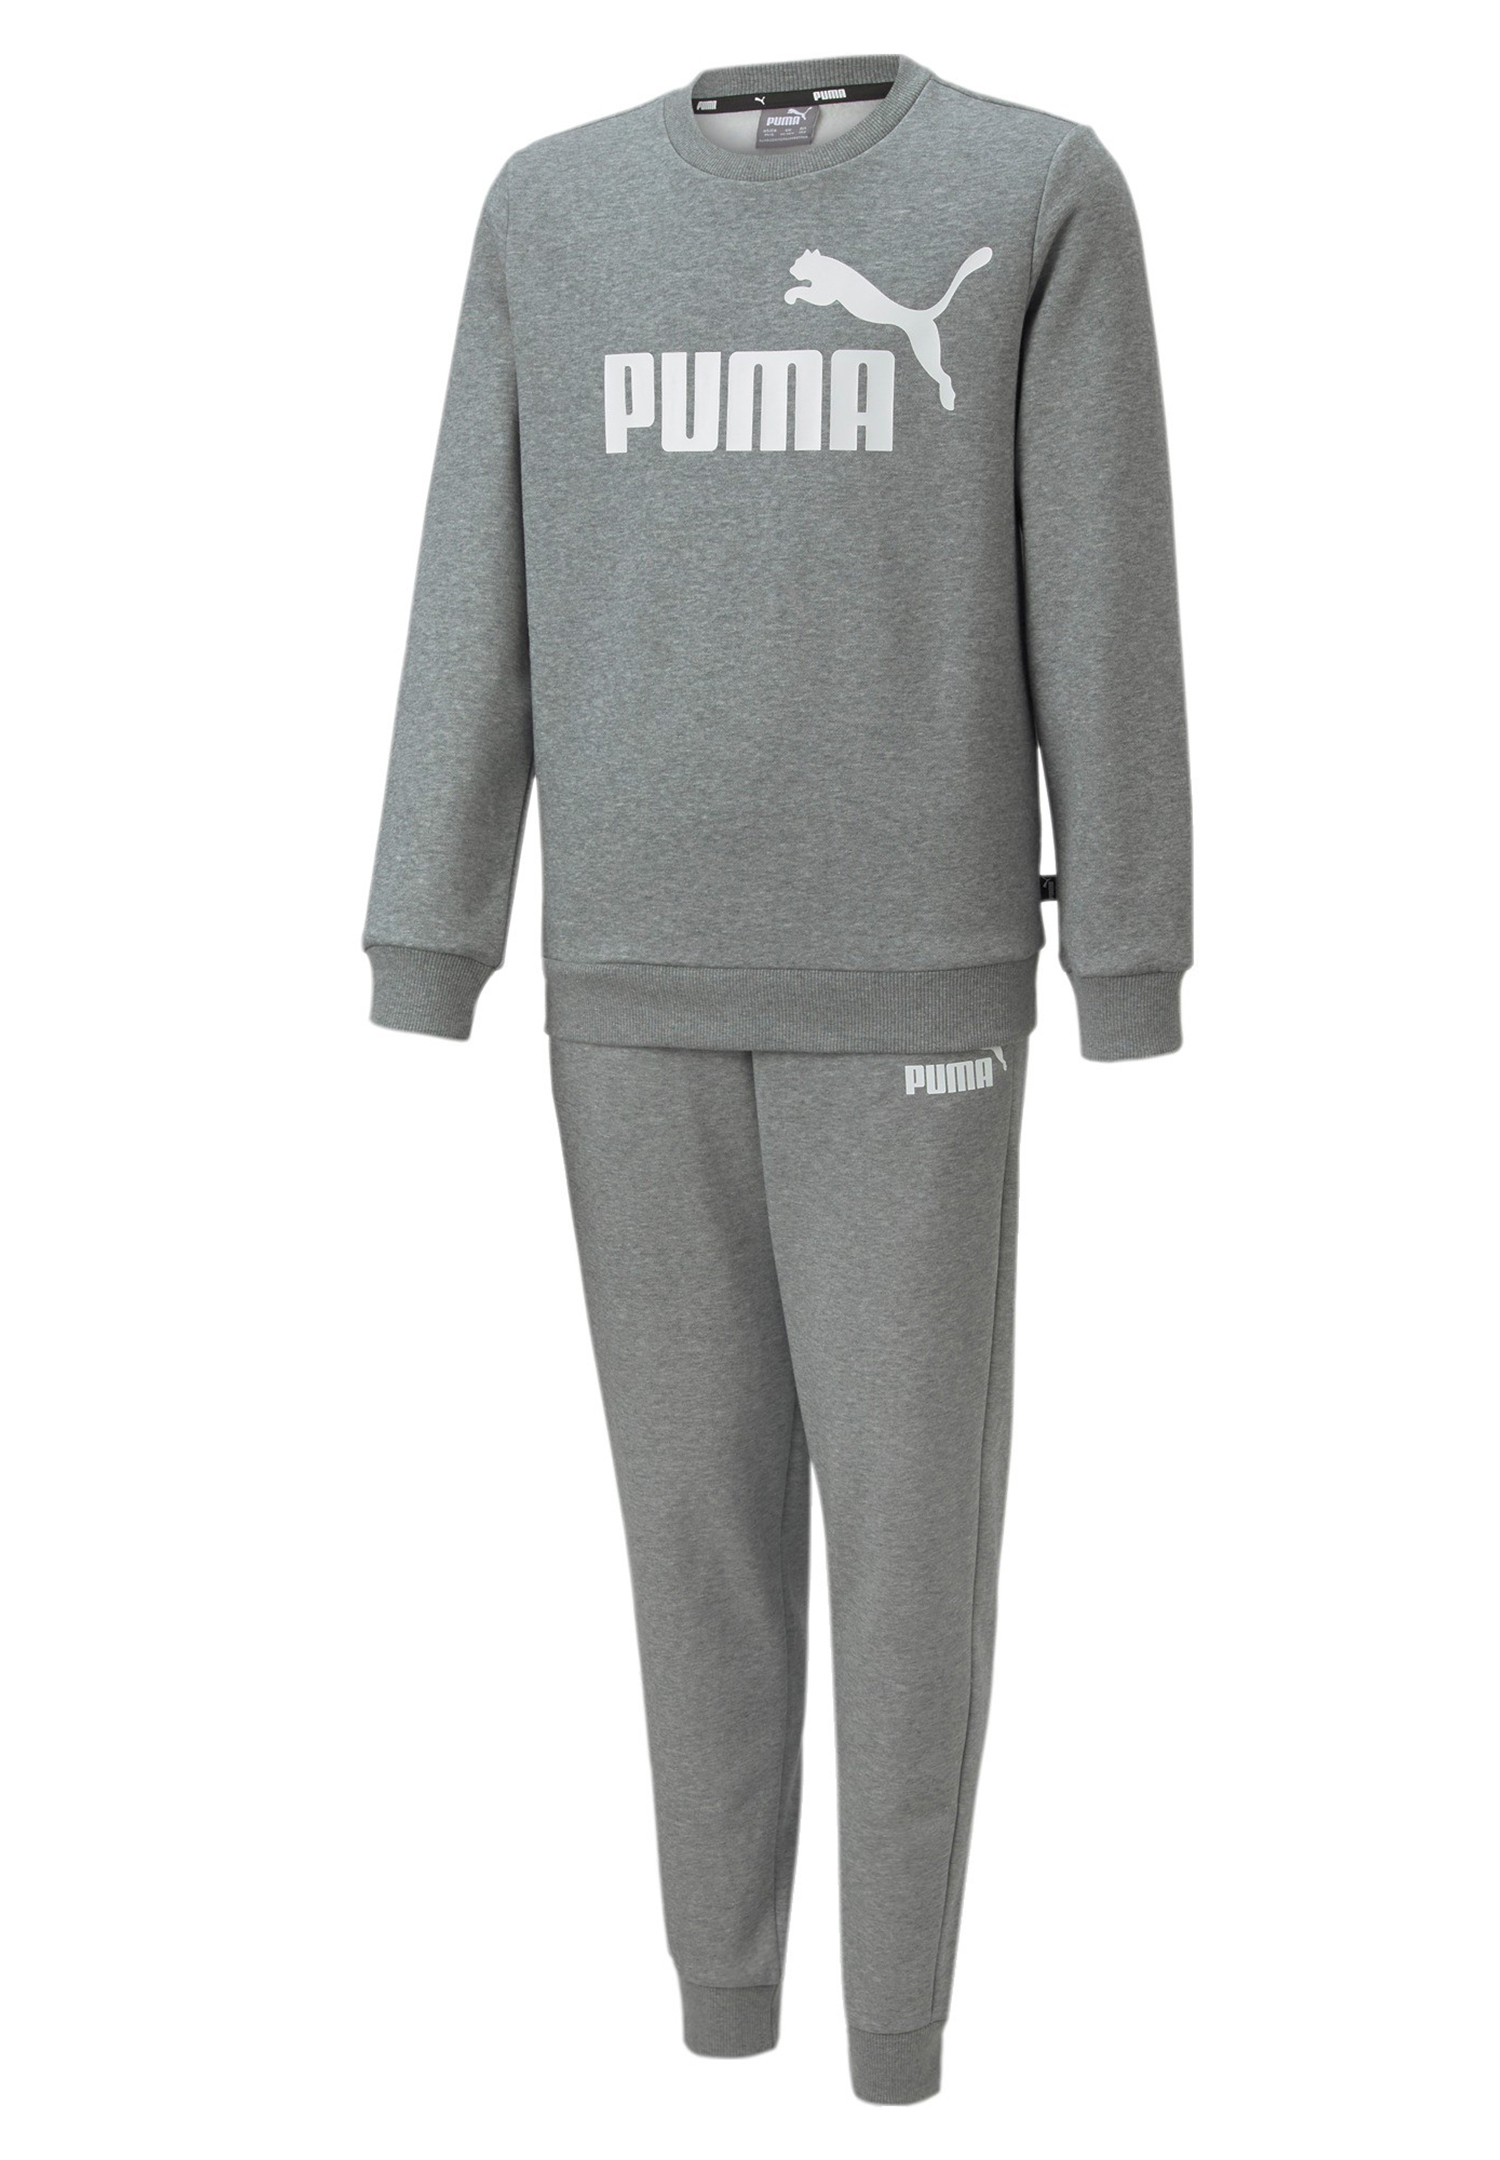 Puma No1 LOGO Sweat Suit FL B Kinder Unisex Jogginganzug 670884 03 grau